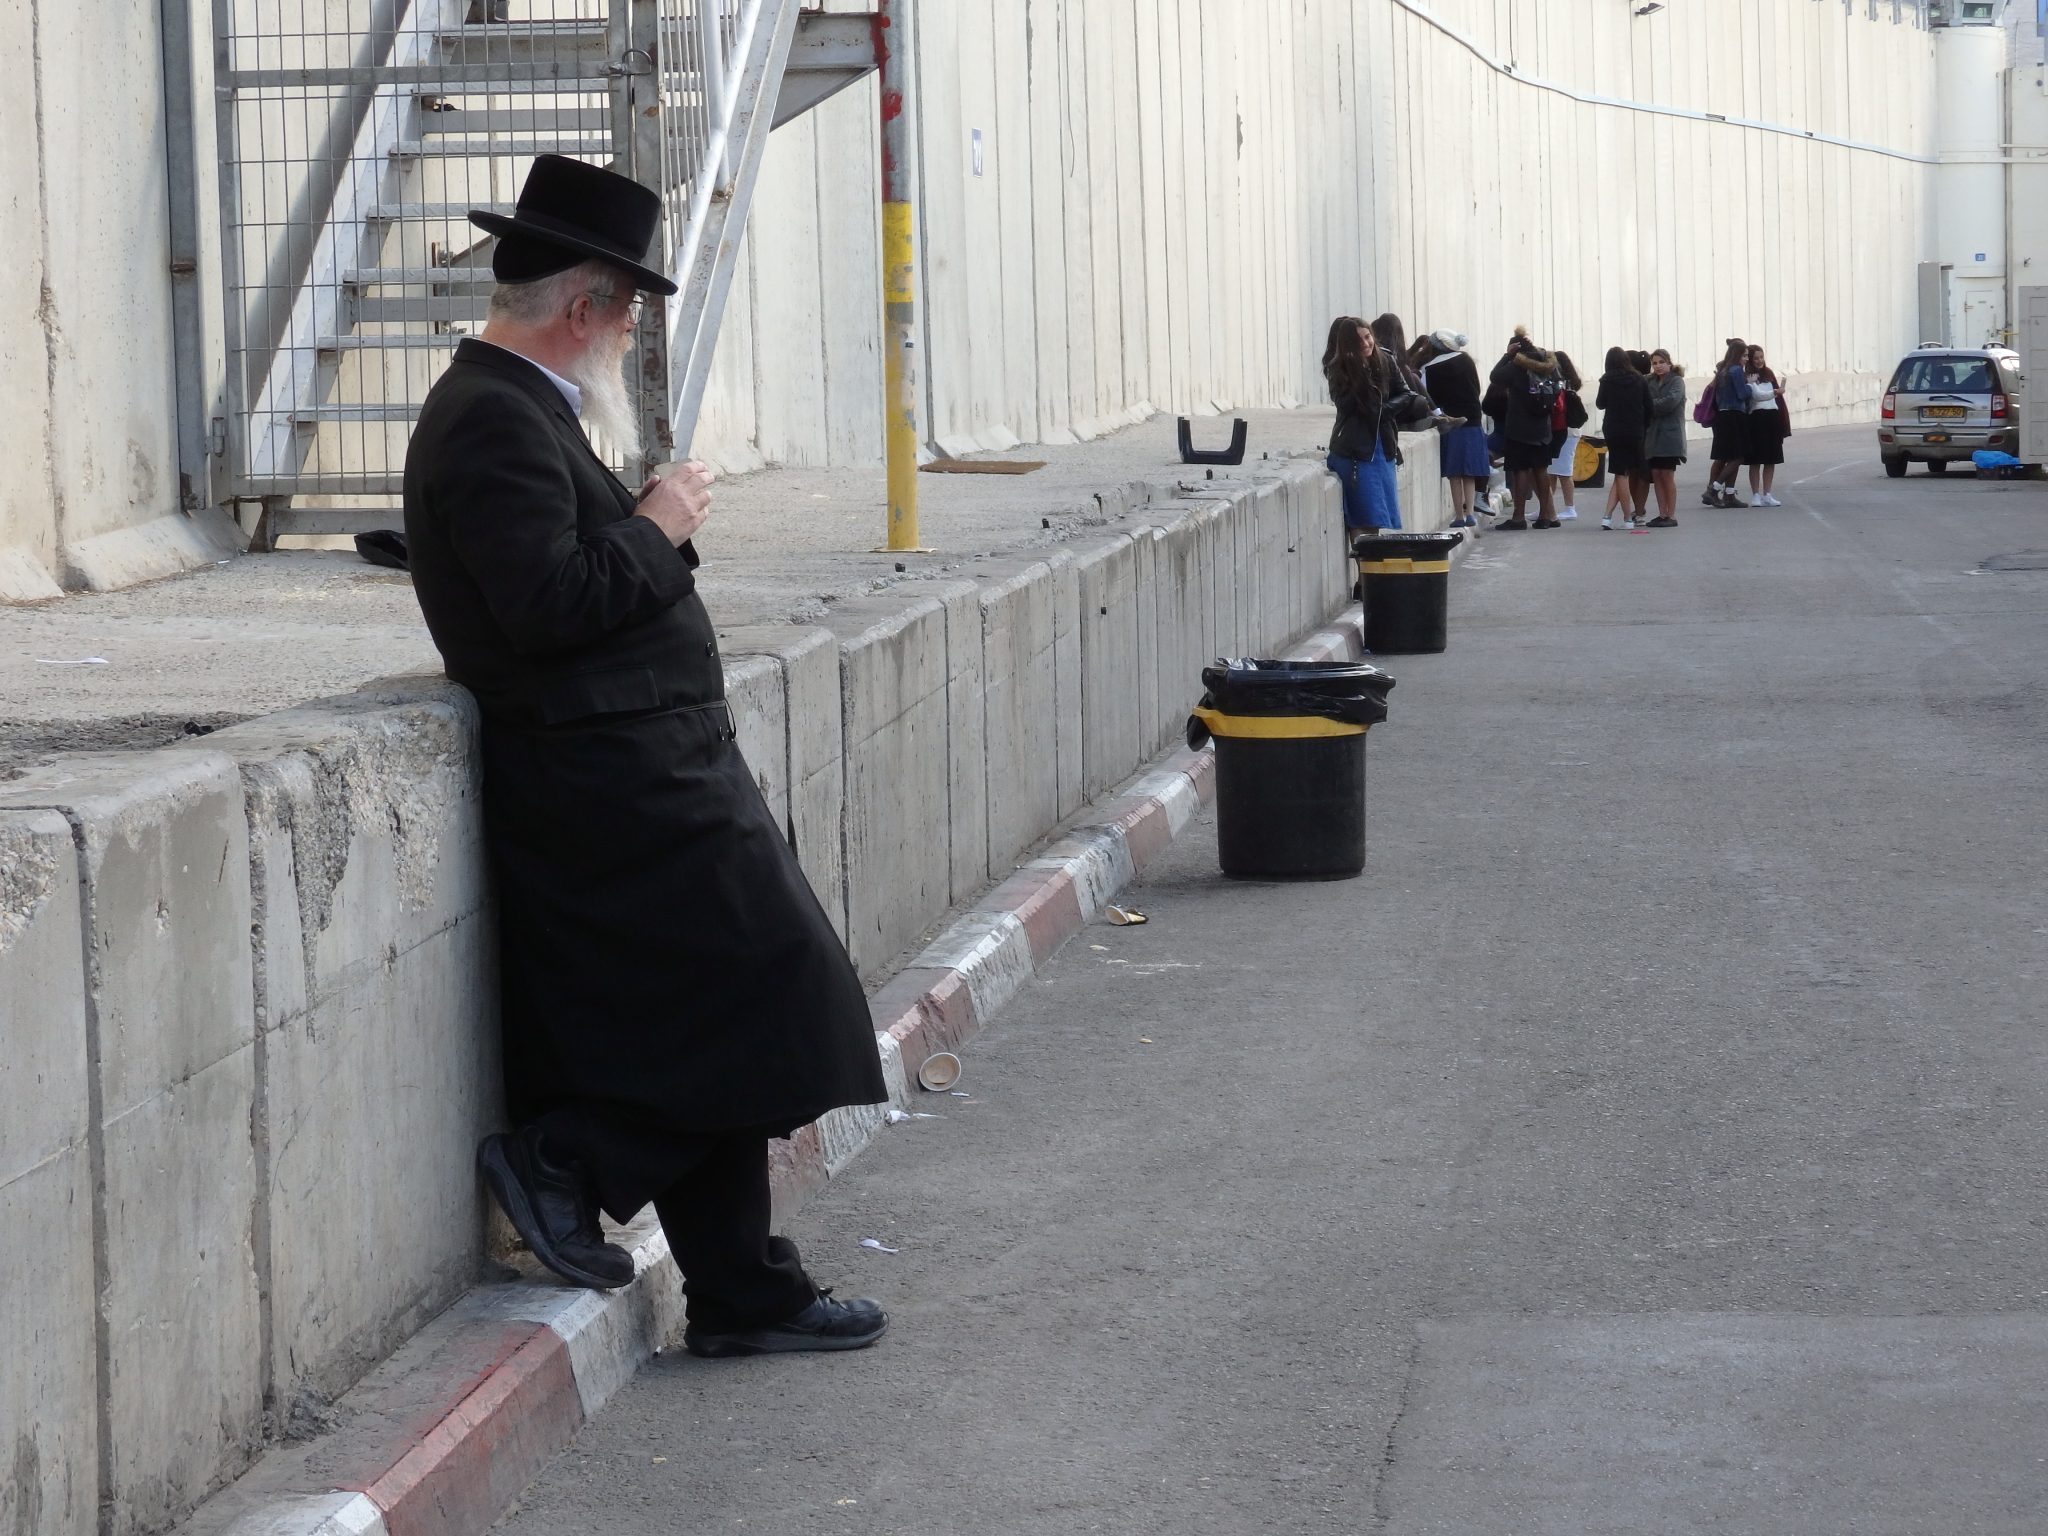 An Orthodox Jew takes a break outside Rachels Tomb